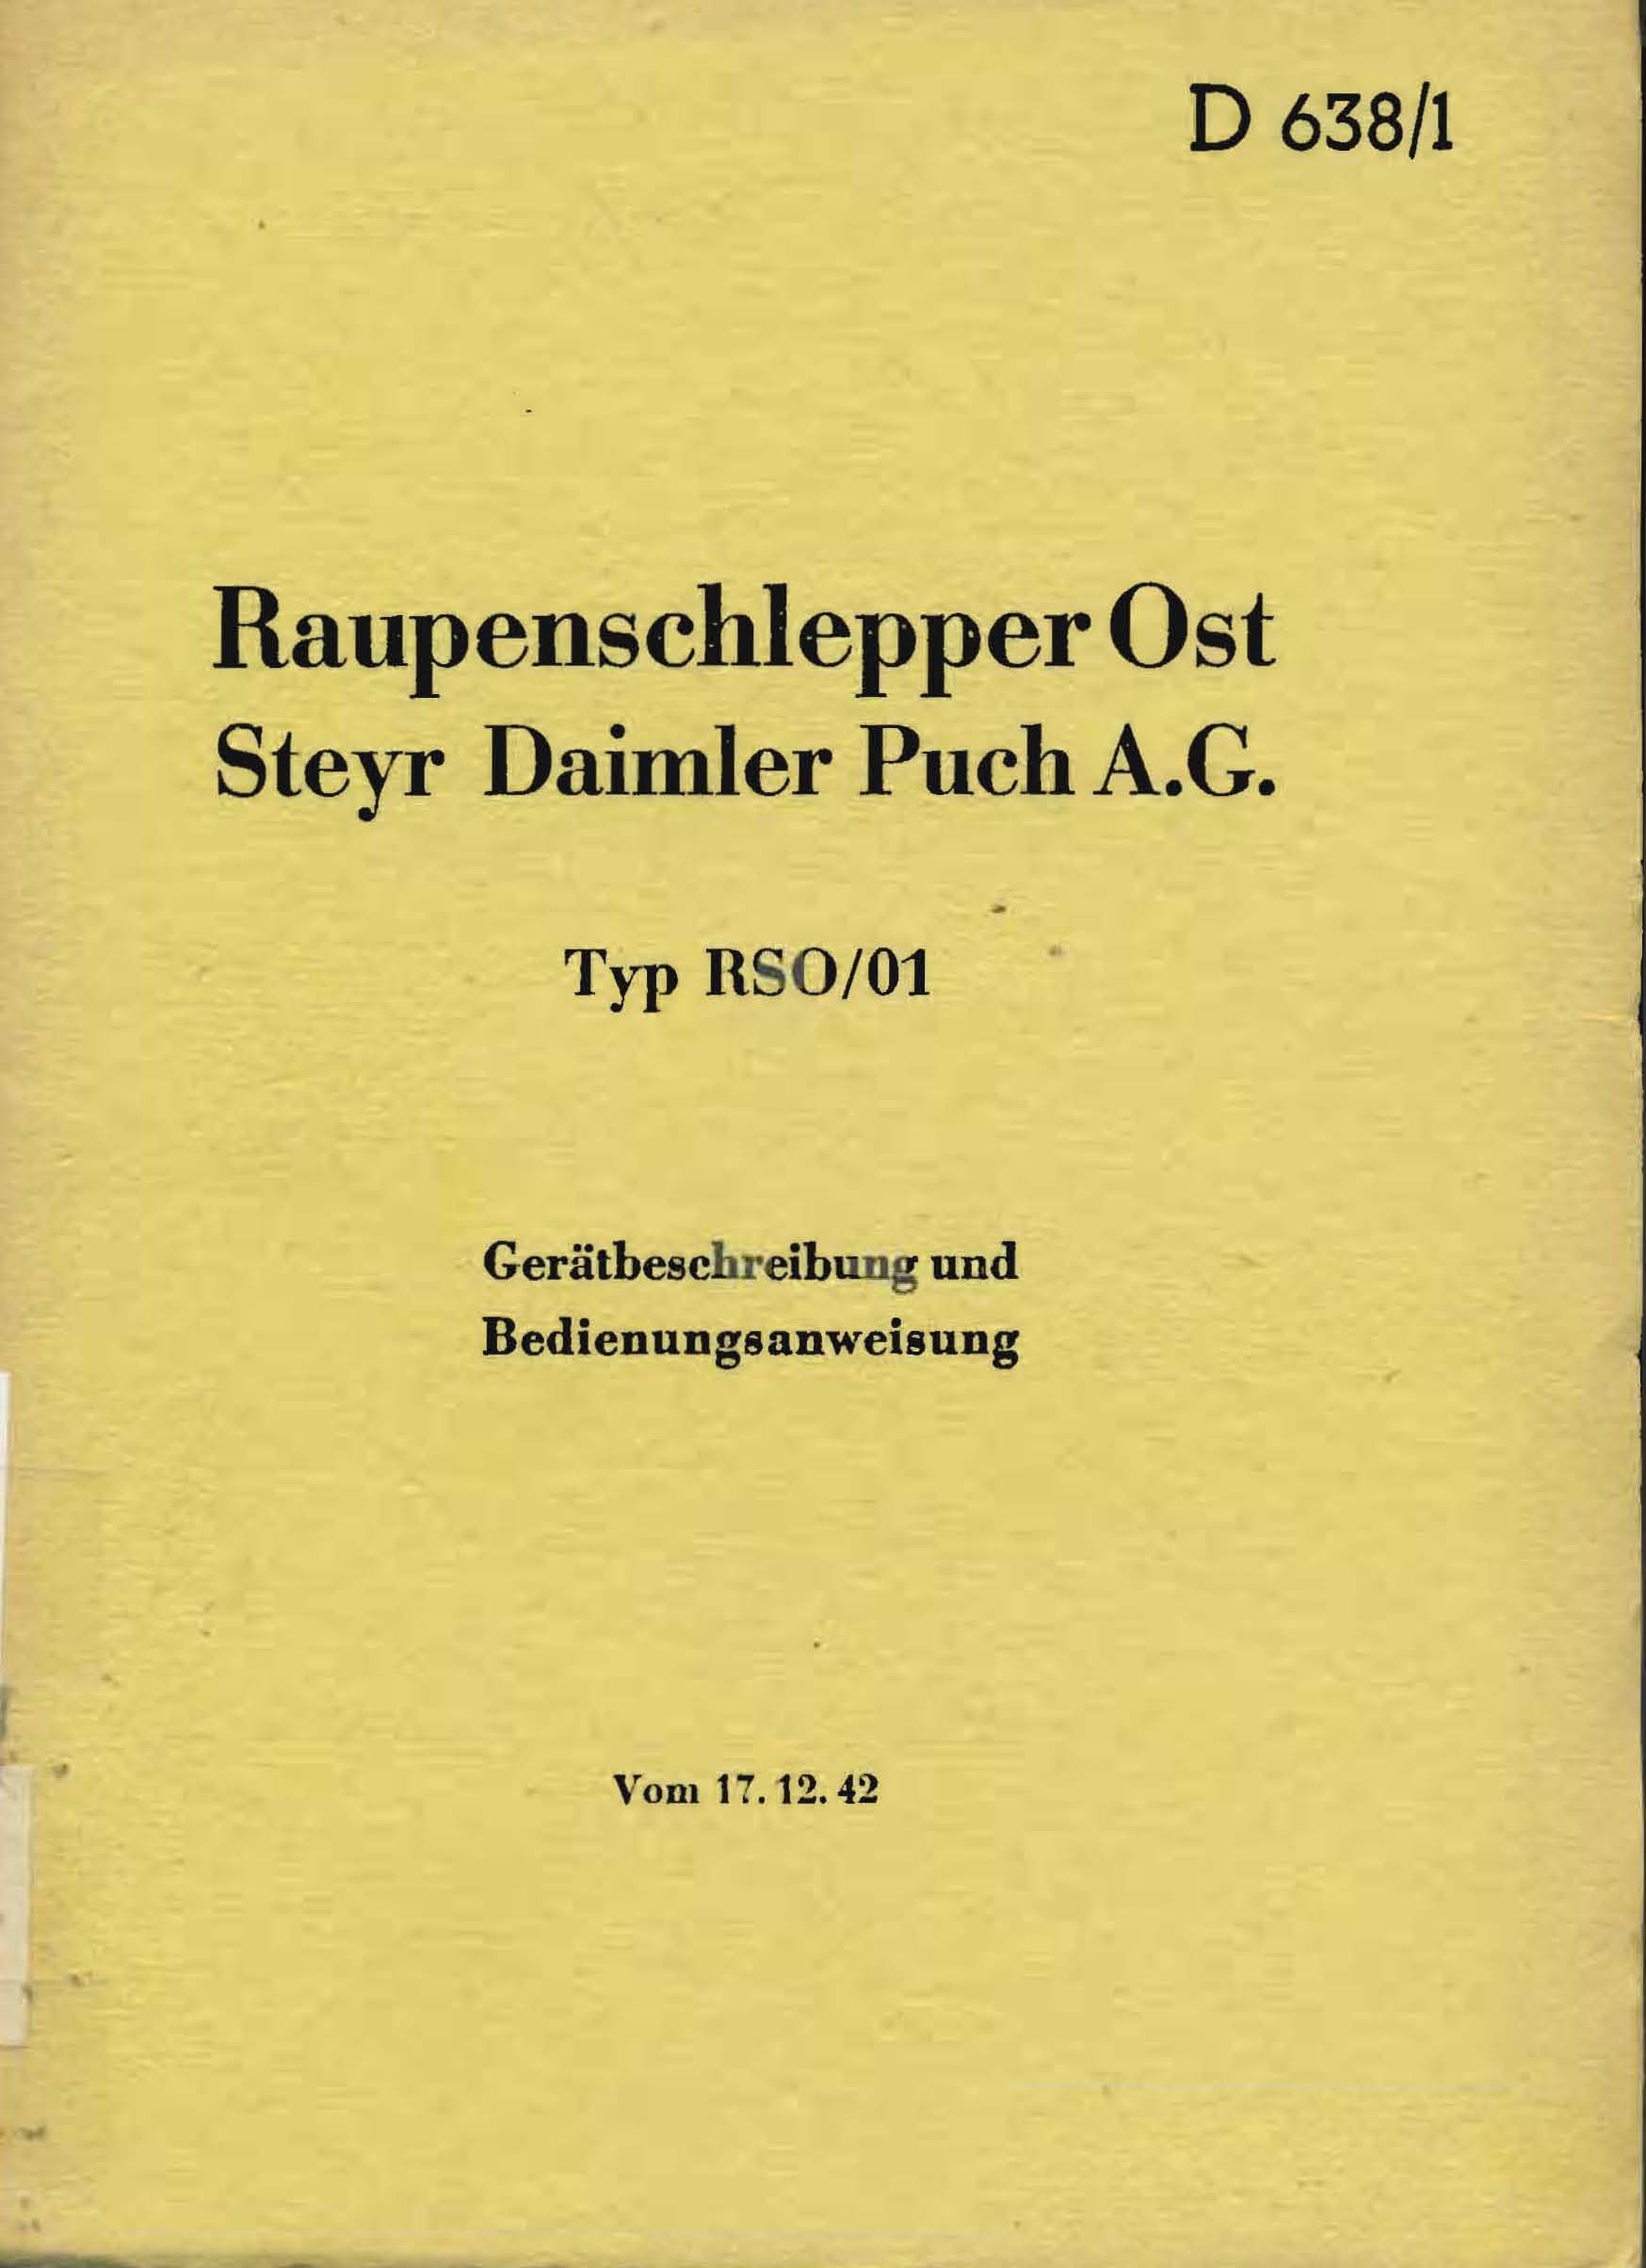 Raupenschlepper Ost Typ RSO/01